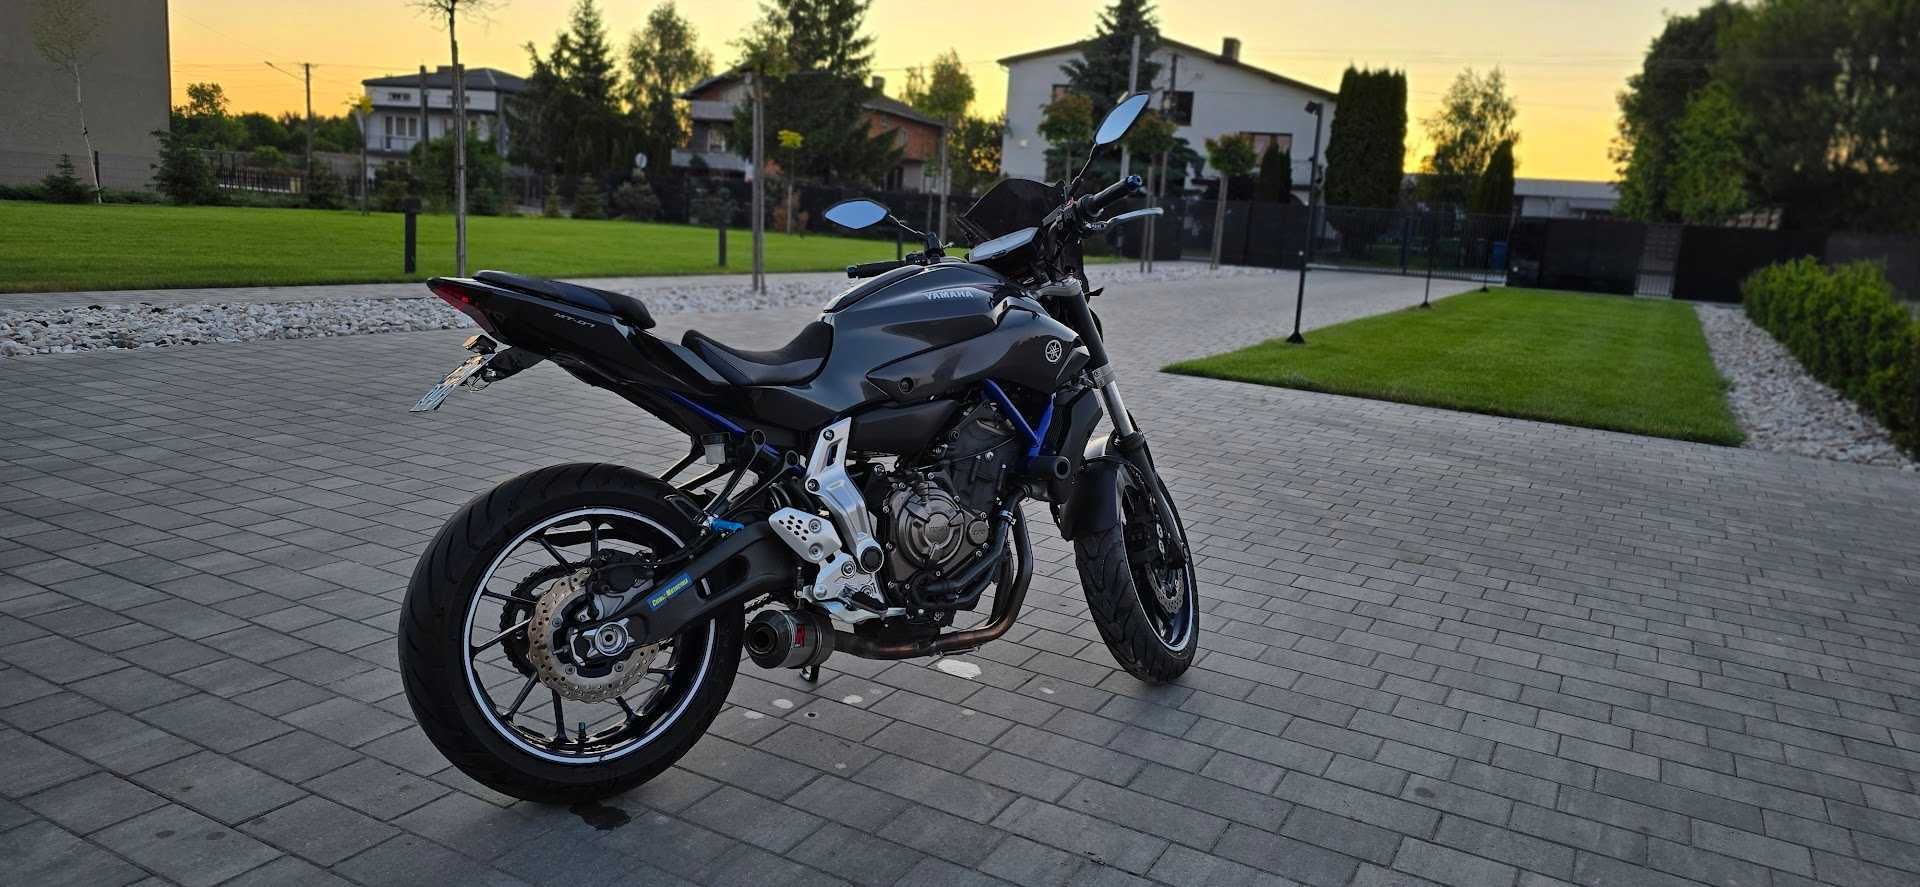 Motocykl Yamaha MT 07